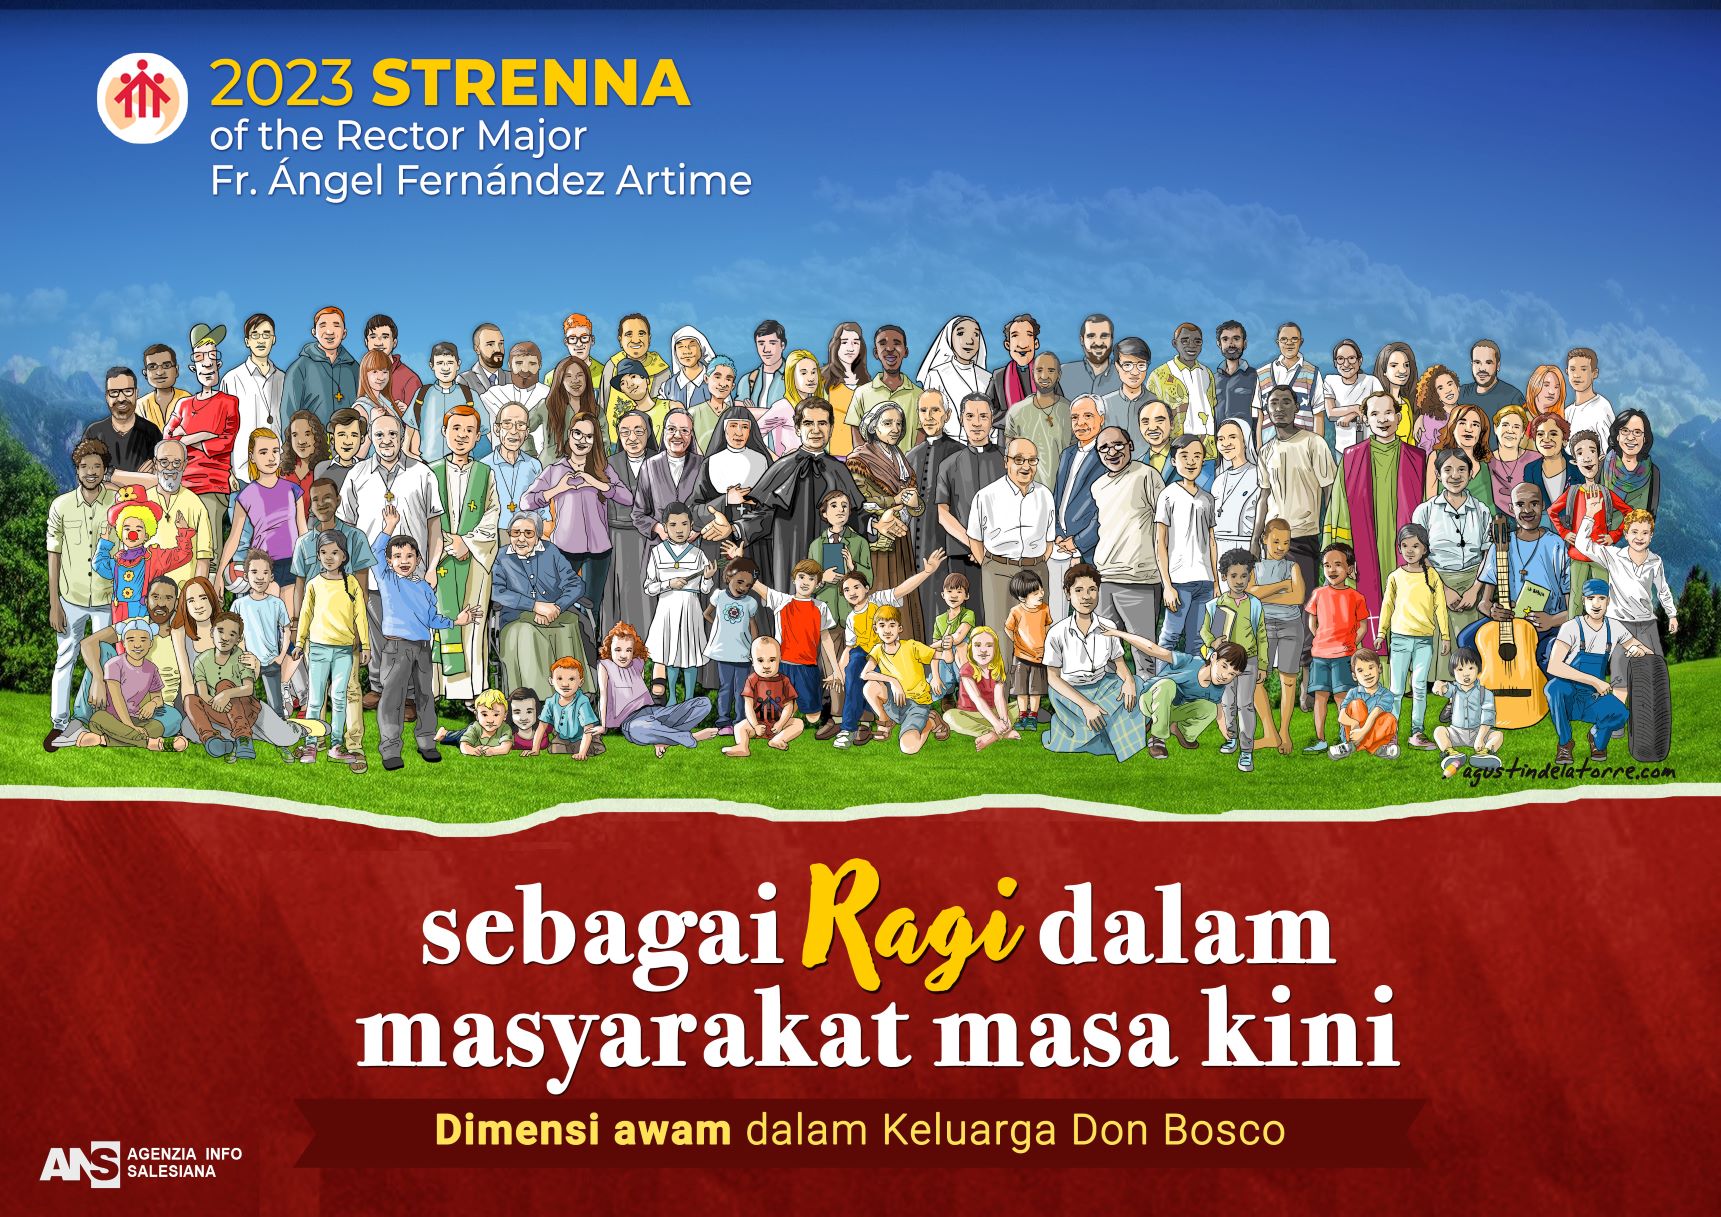 Strenna 2023 Indonesian+.jpg